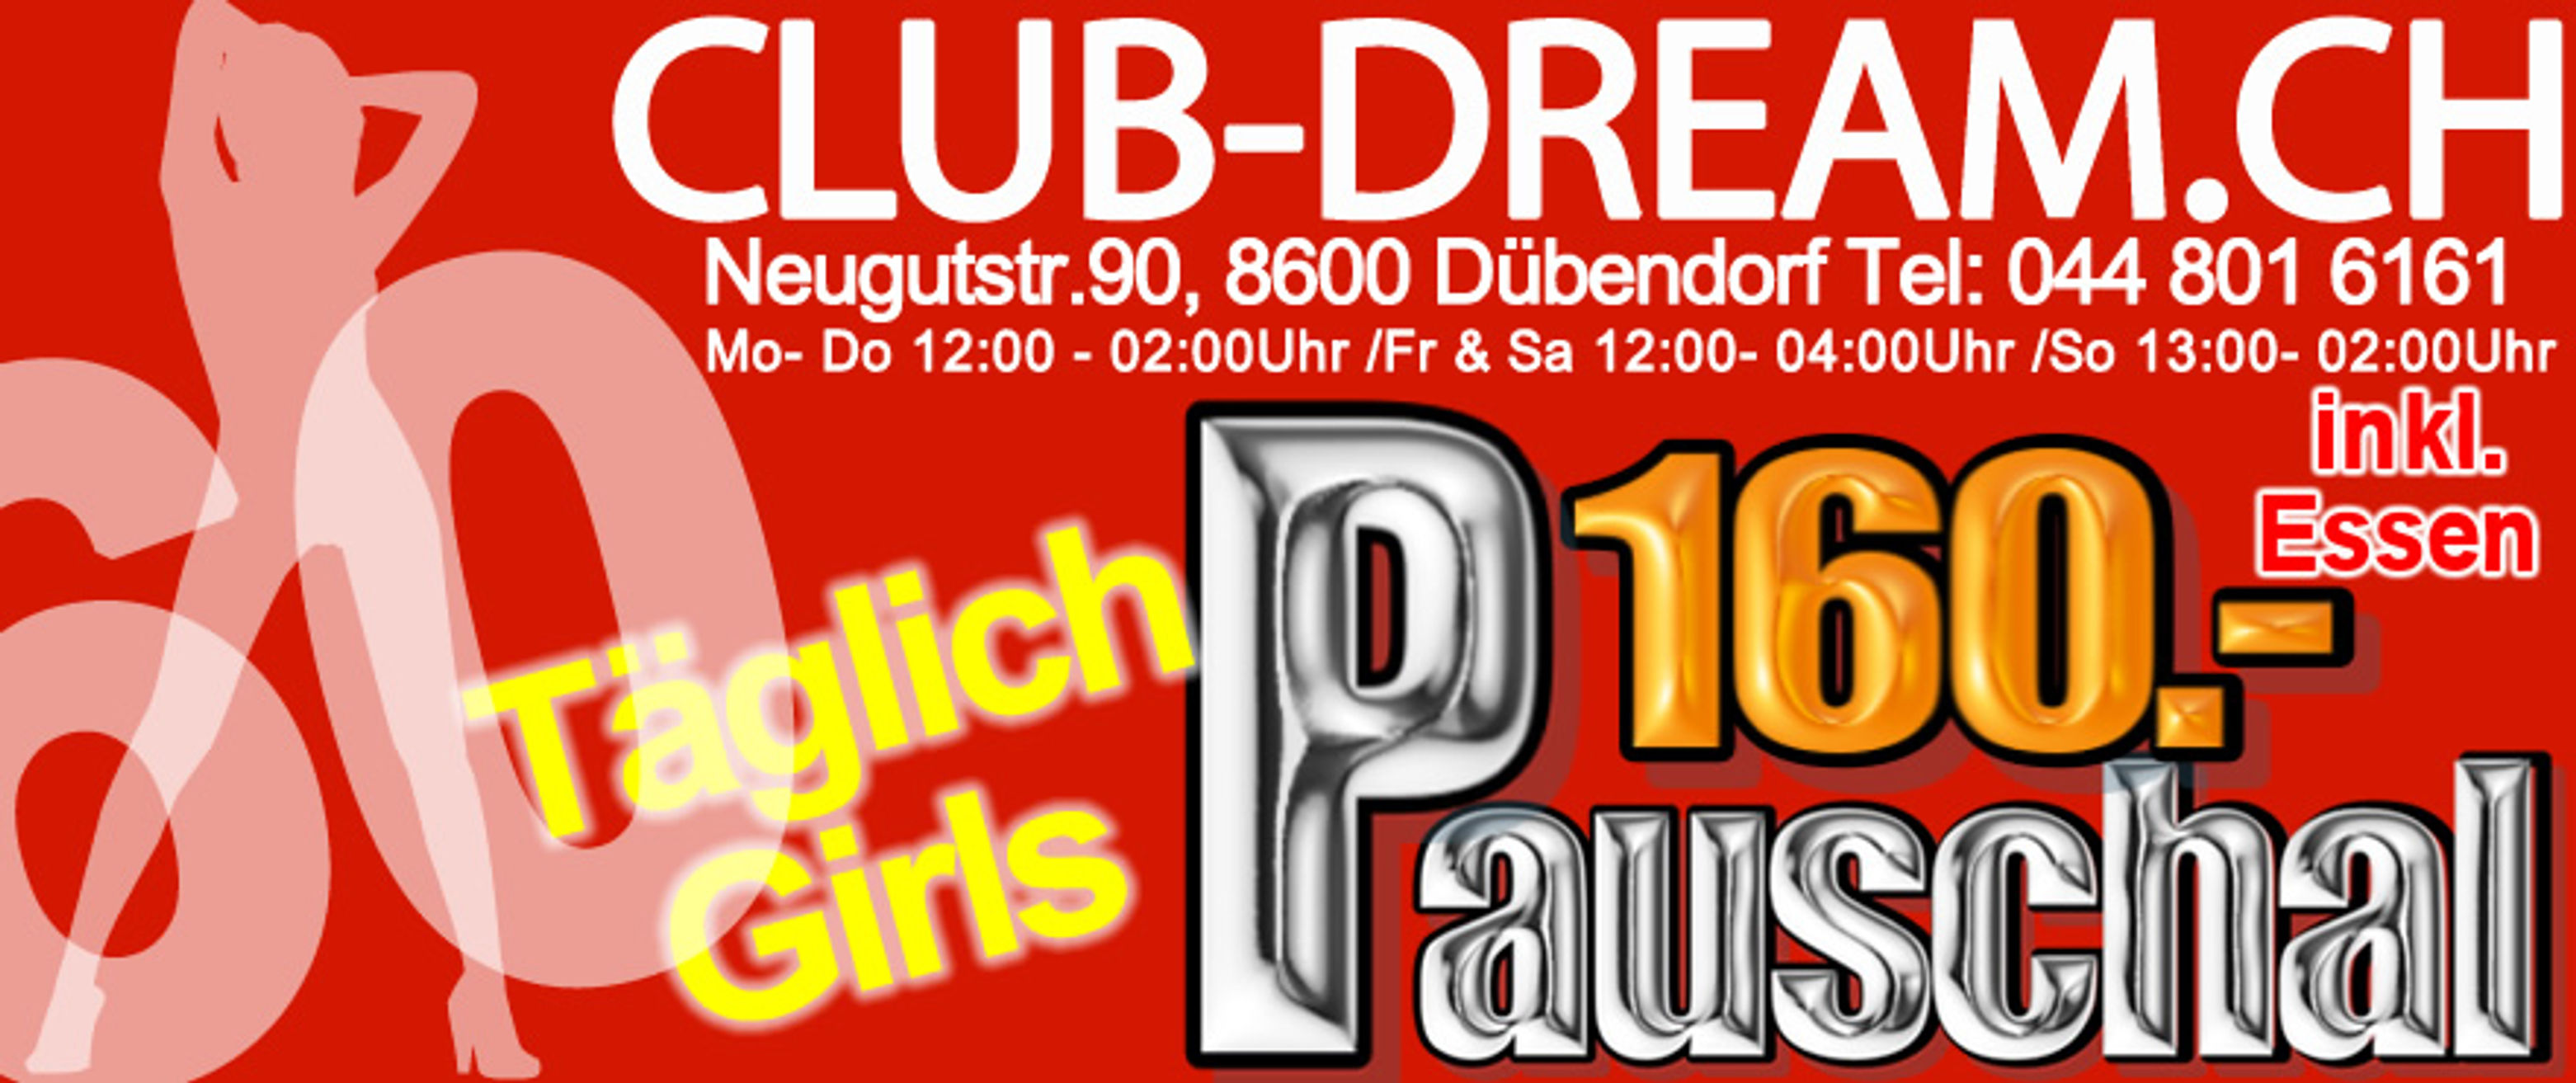 Club Dream - Dübendorf - Guidle